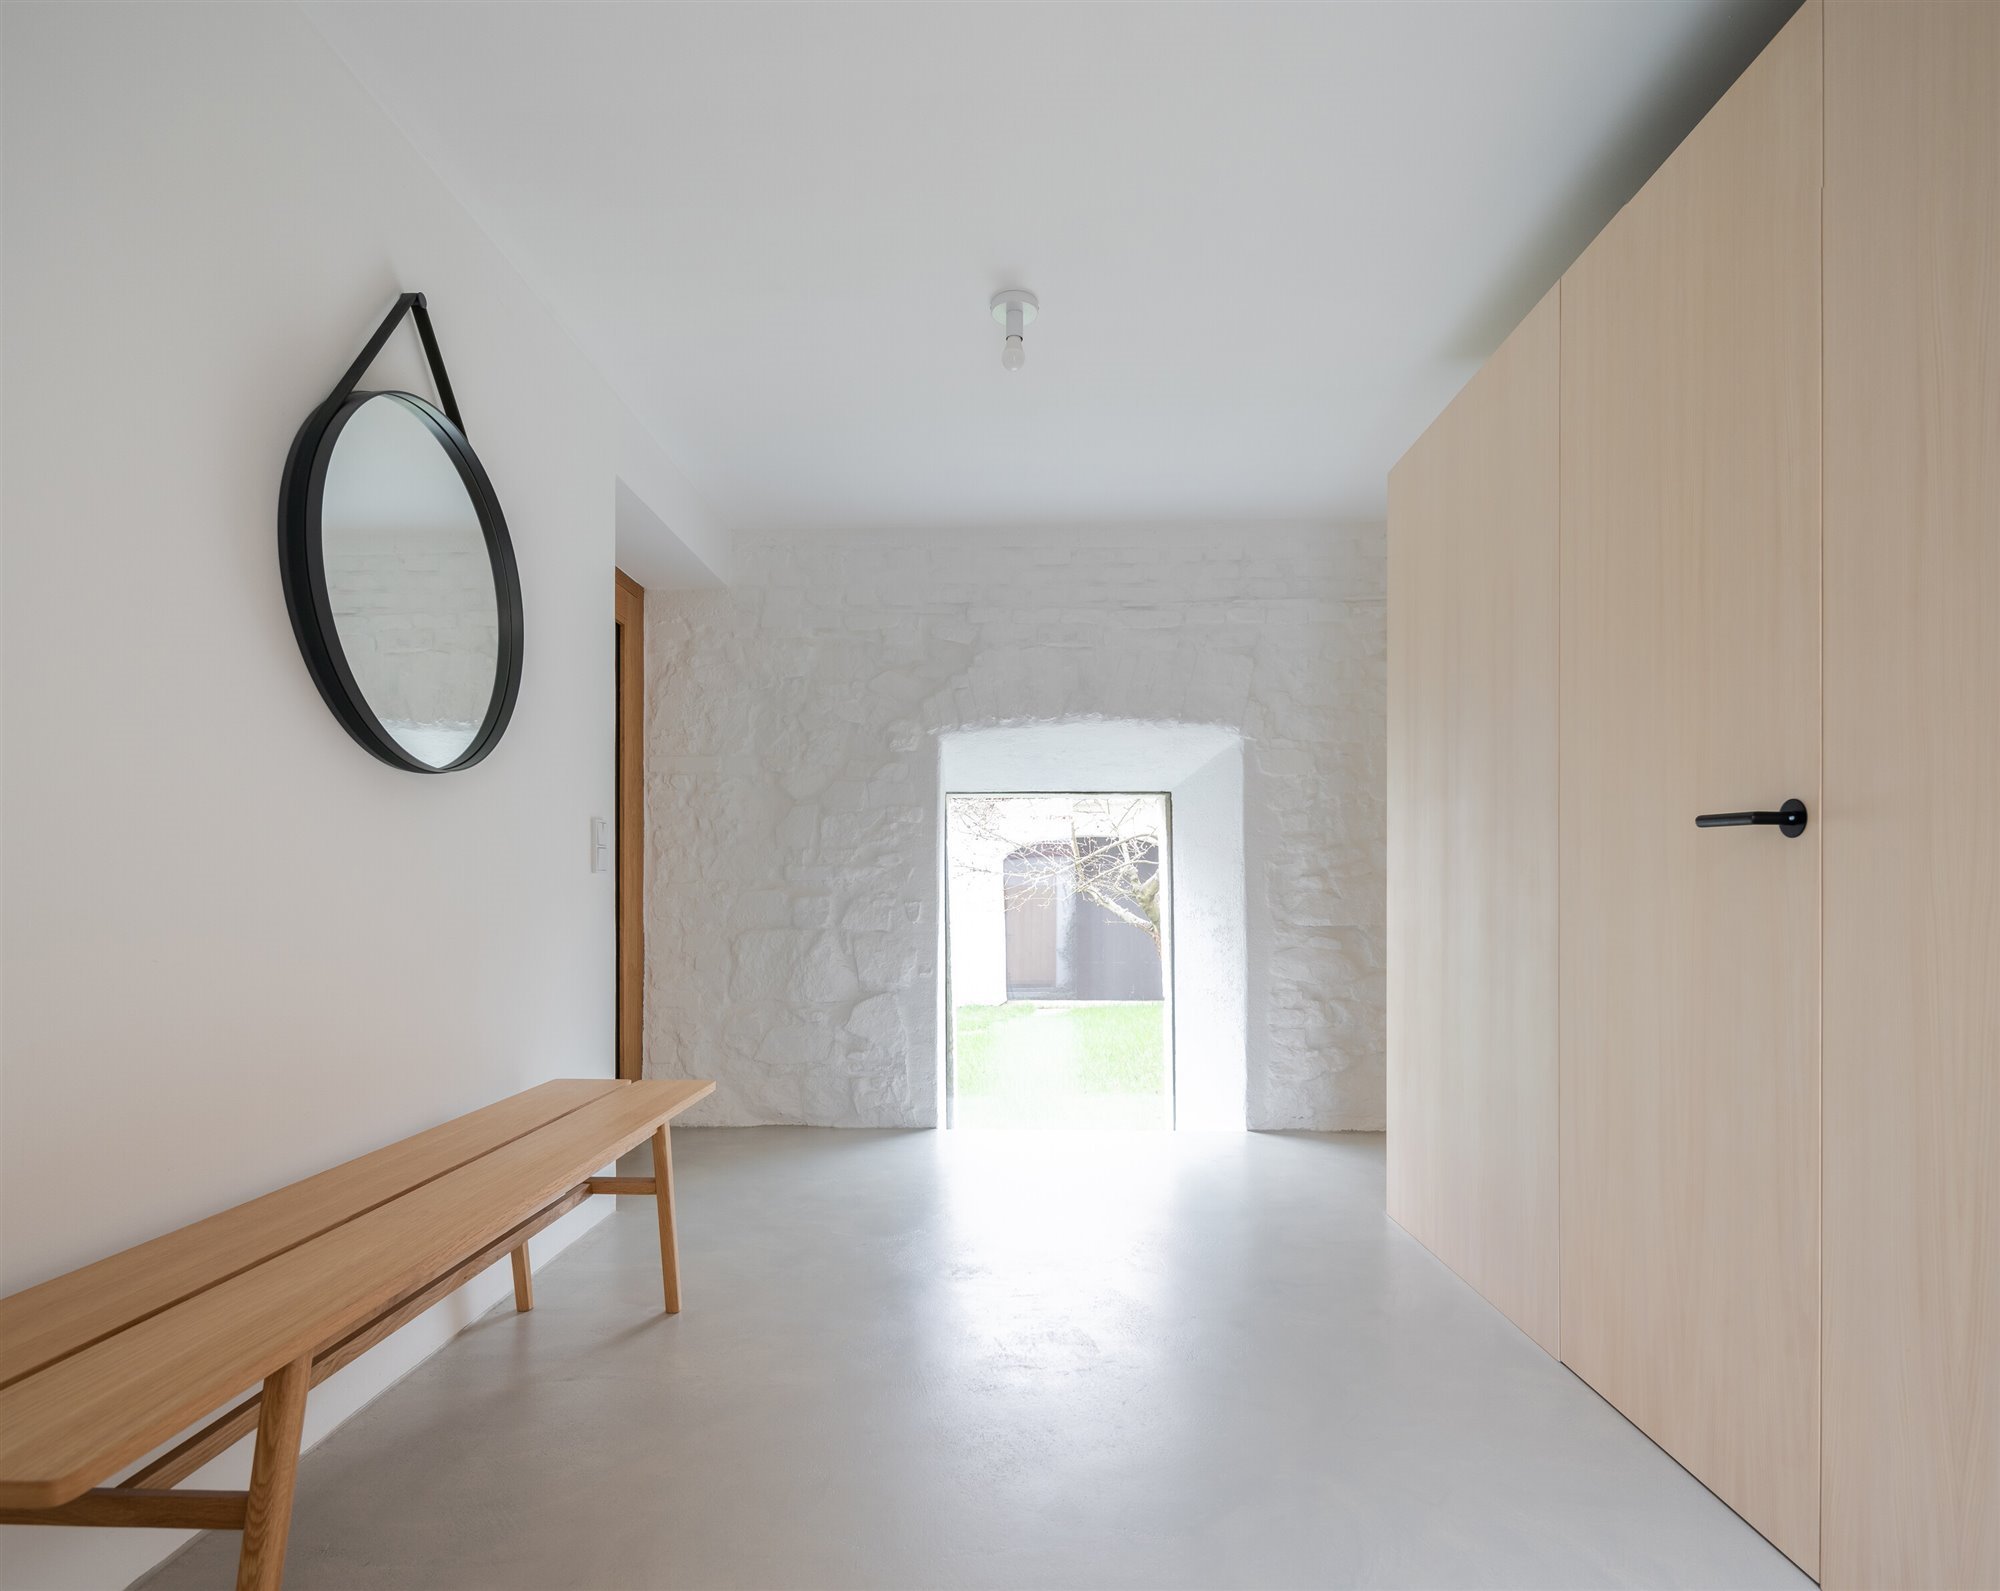 Atelier 111 architekti 0-suelo-cemento-pulido-blanco-entrada-casa-atelier-111-kozina-house-alexshootsbuildings-09 4830f4e8 2000x1591